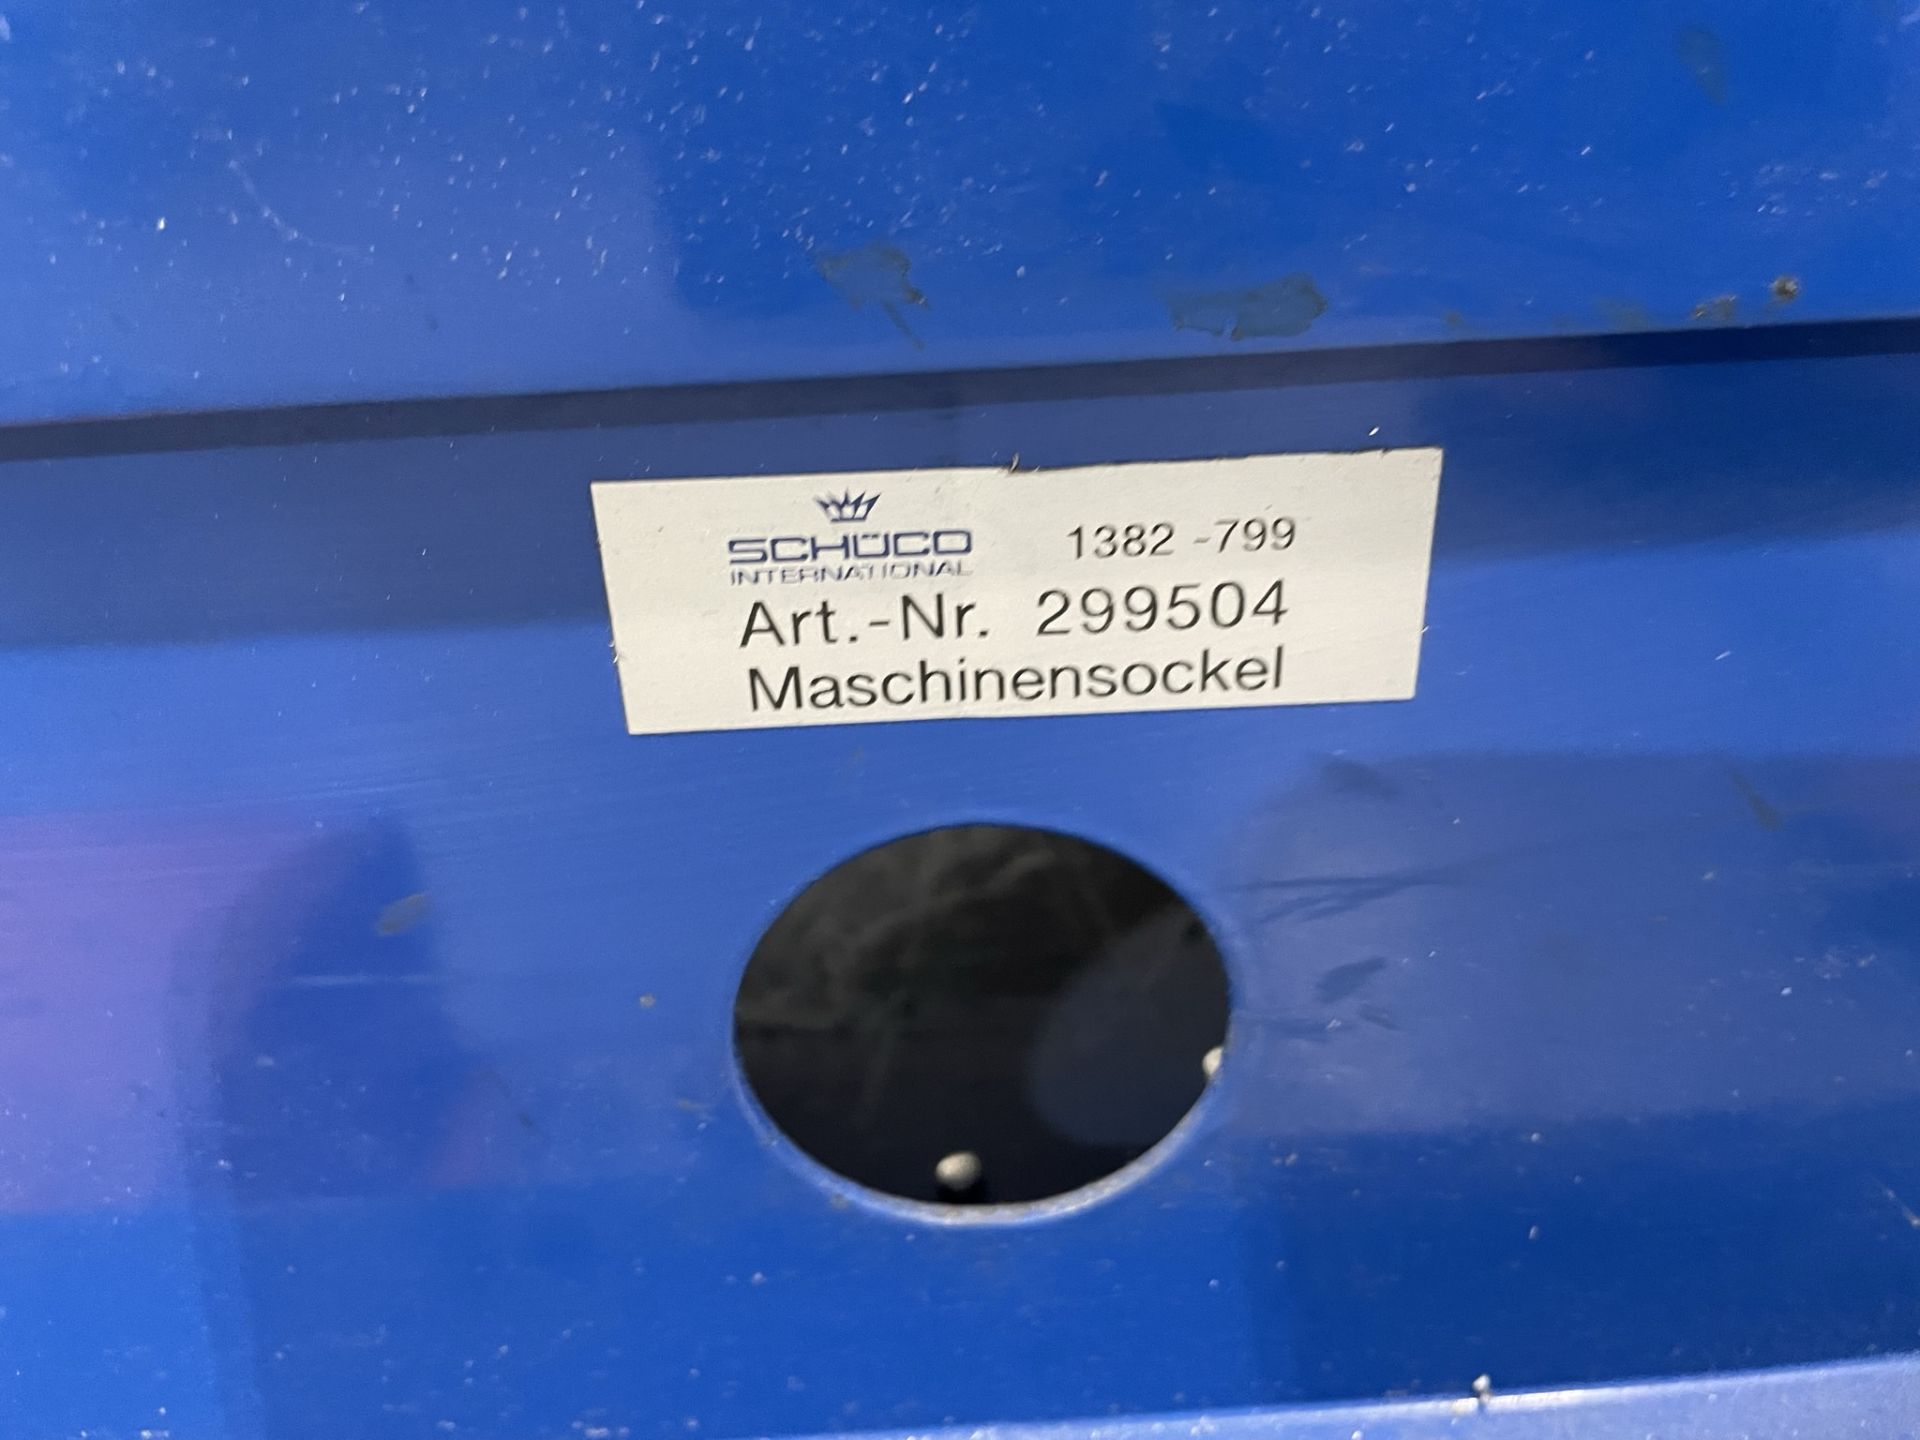 Schuco, 1382-799 pneumatic press, Serial No. 299504 and four station press tool - Image 3 of 3